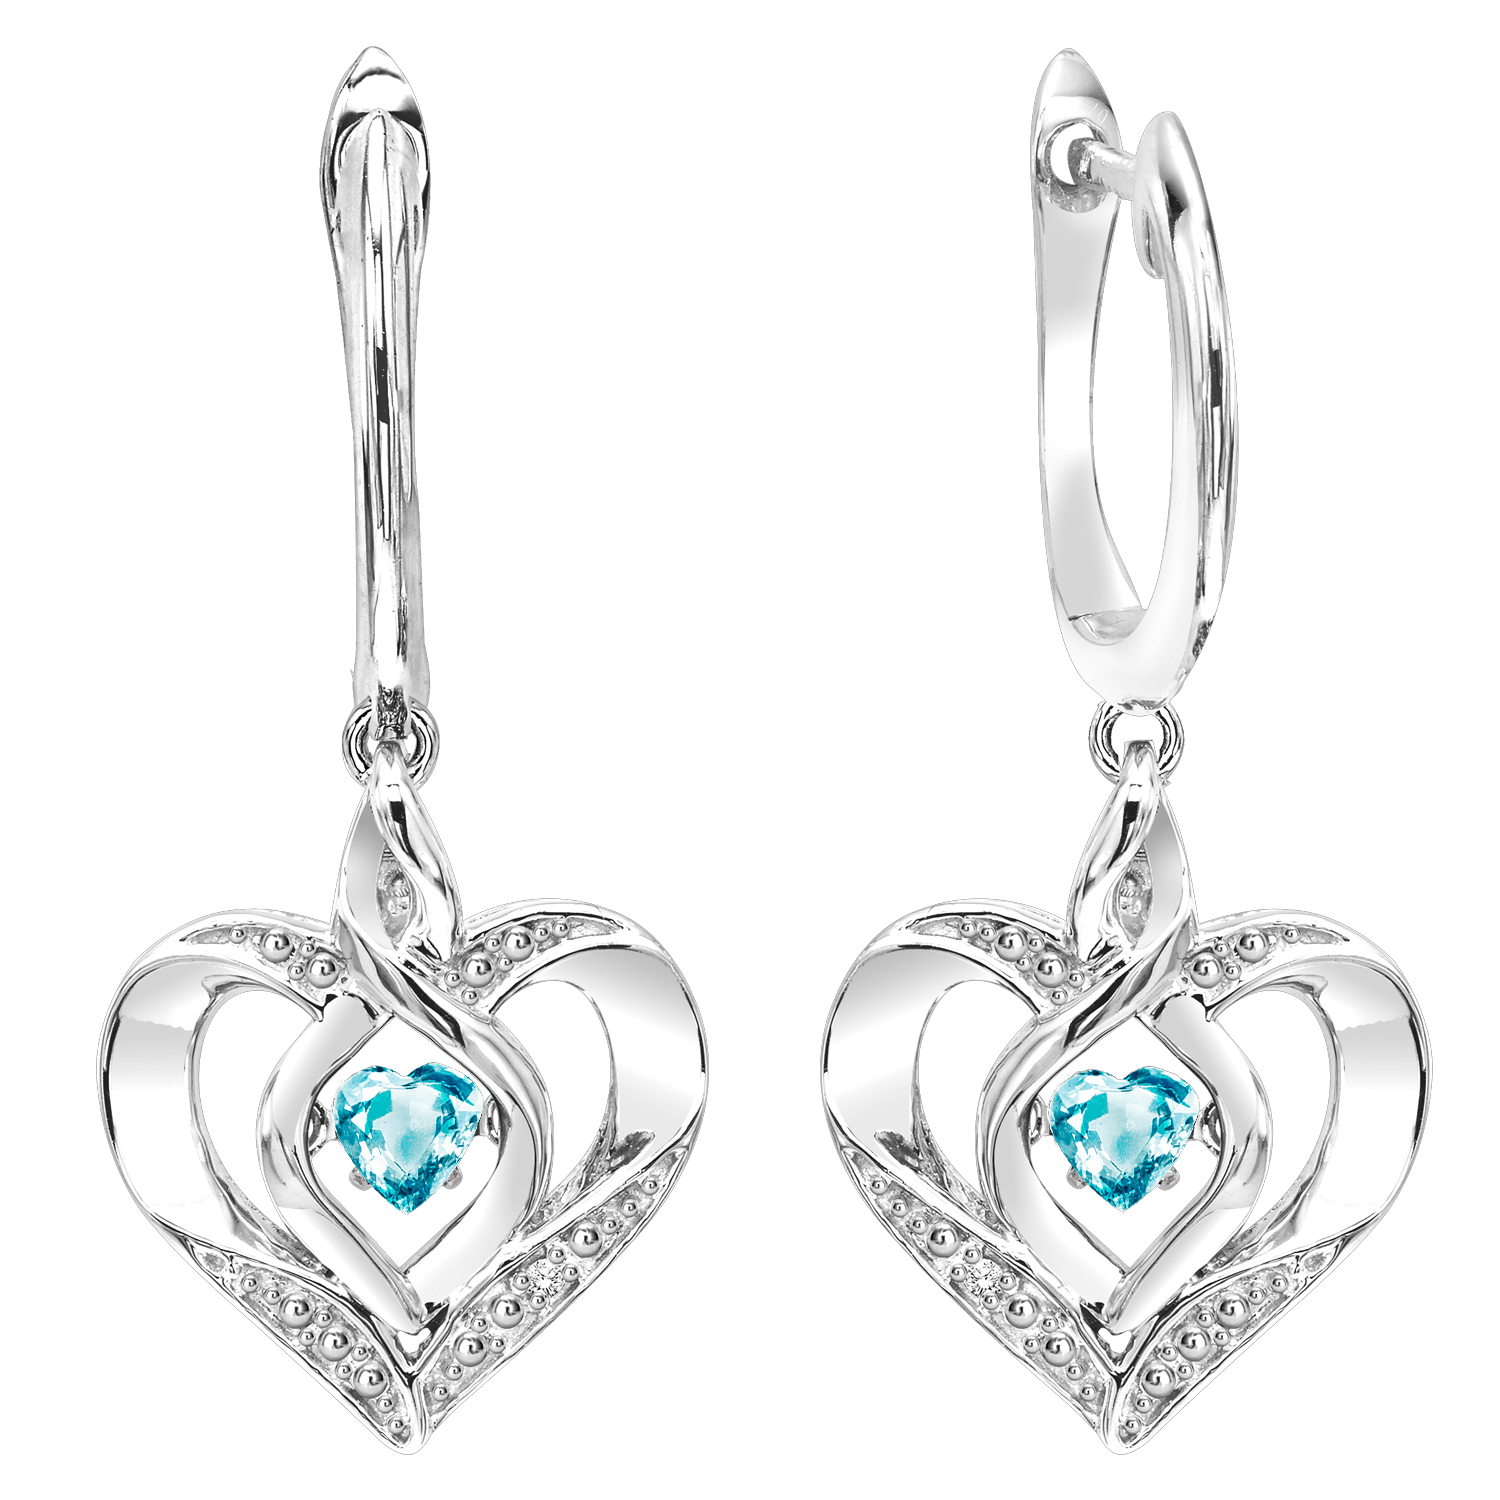 BW James Jewelers Earrings 16 Page Christmas Catalog Offer SS Diamond ROL-Birthst Heart Blue Topaz Basics Earring